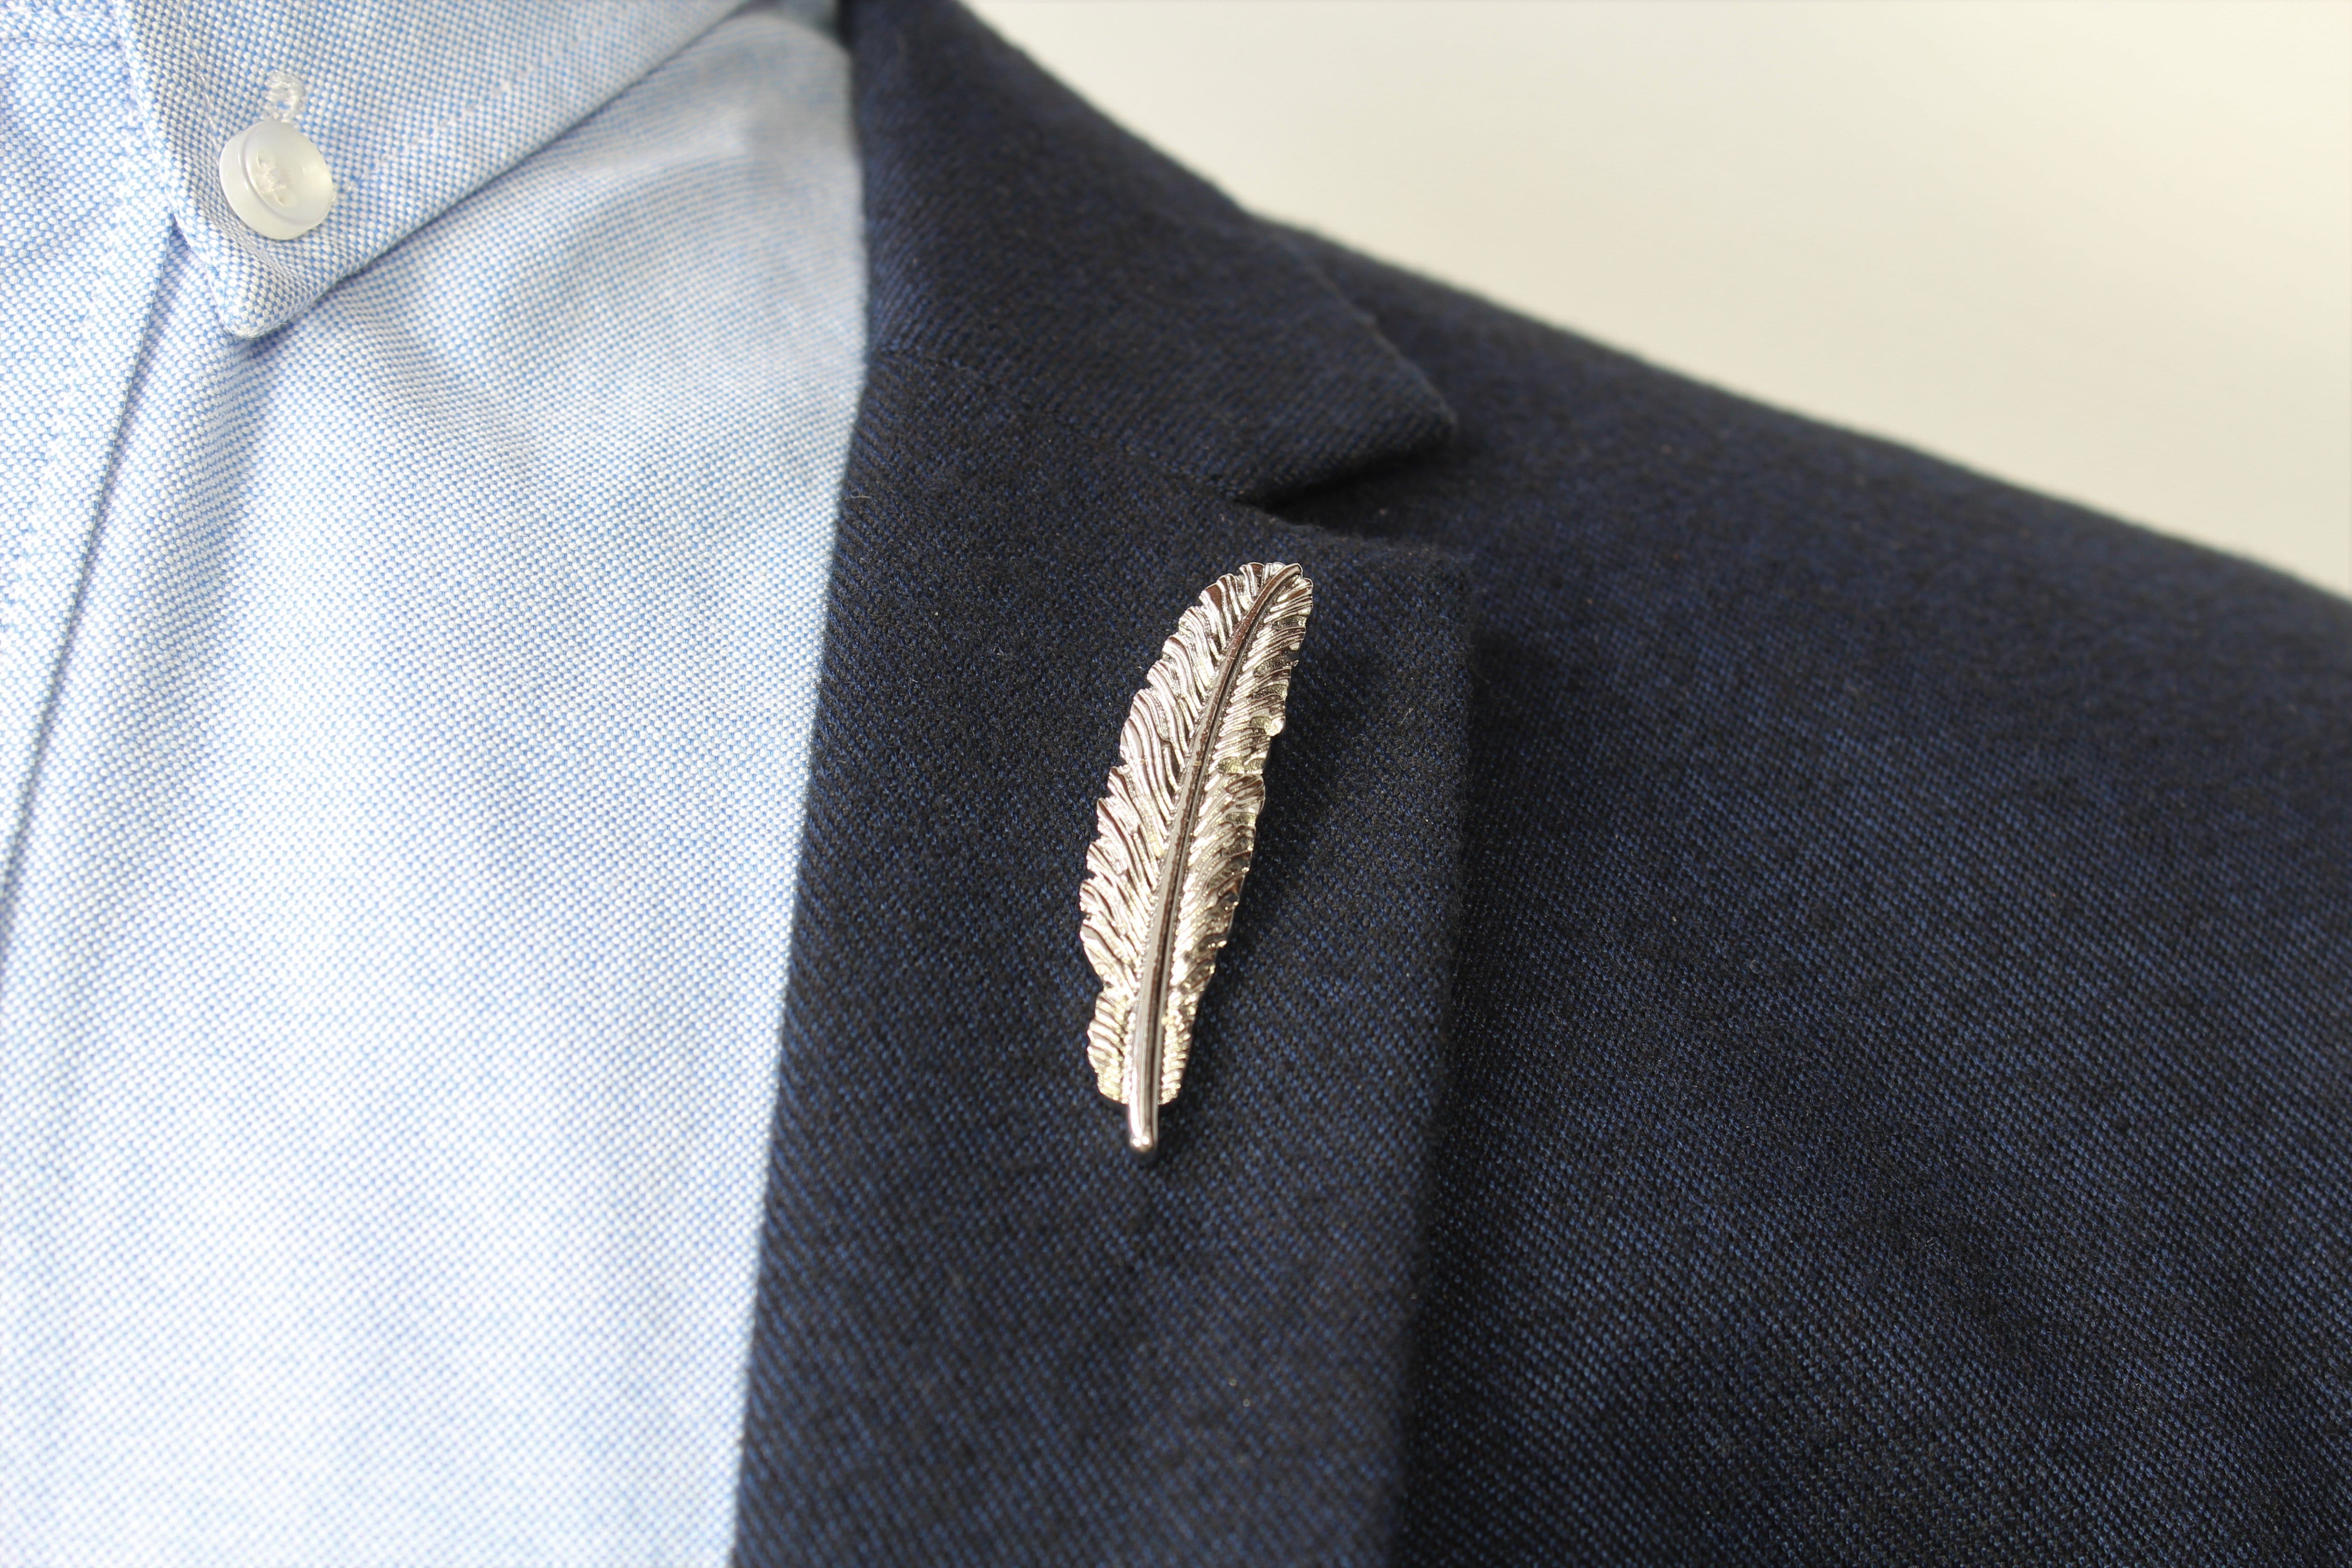 Feather Lapel Pin on blazer - Stolen Riches